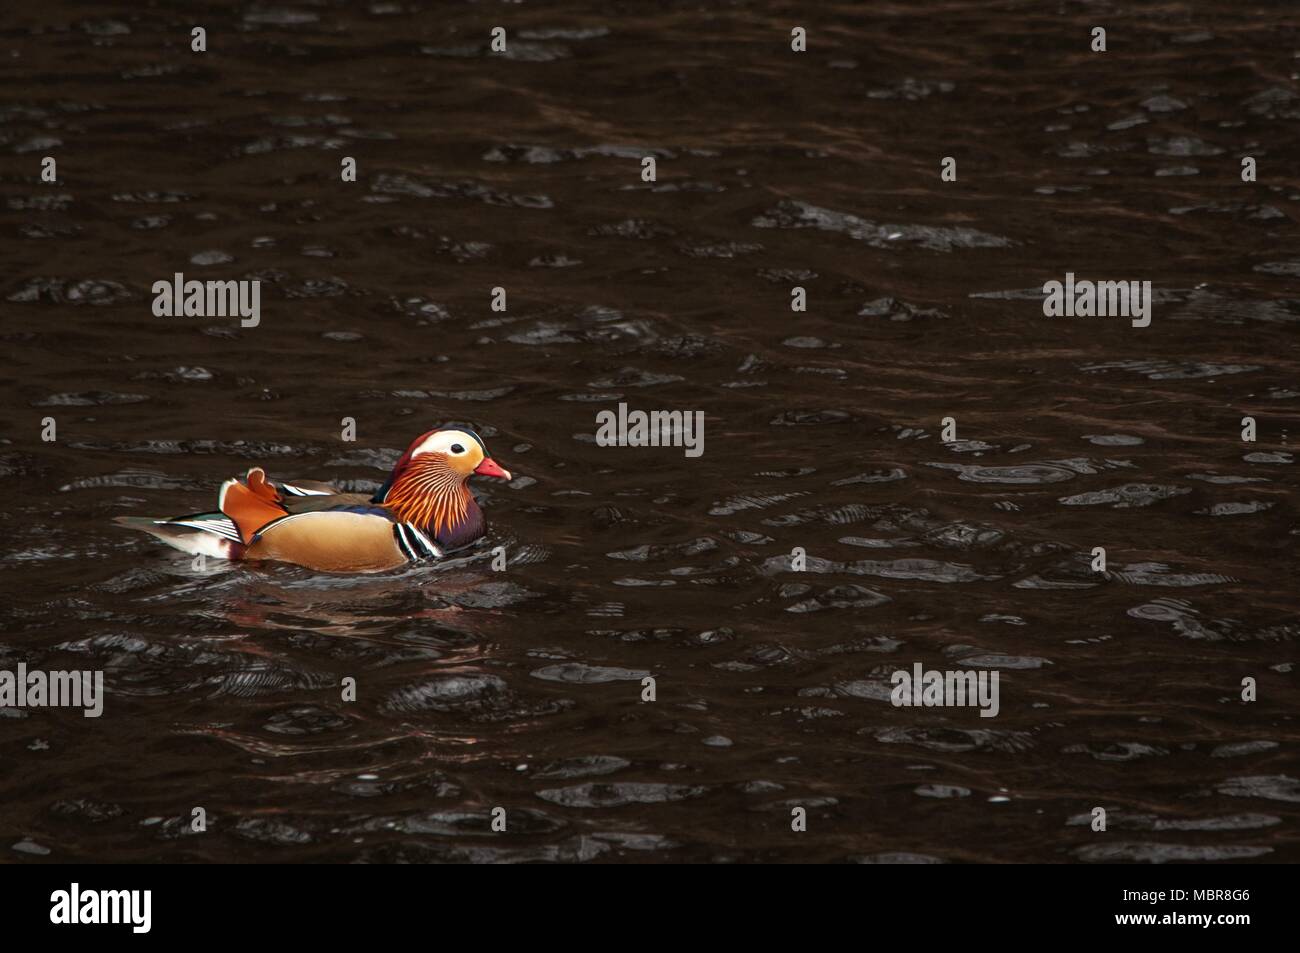 A single male Mandarin duck swimming on dark water Stock Photo